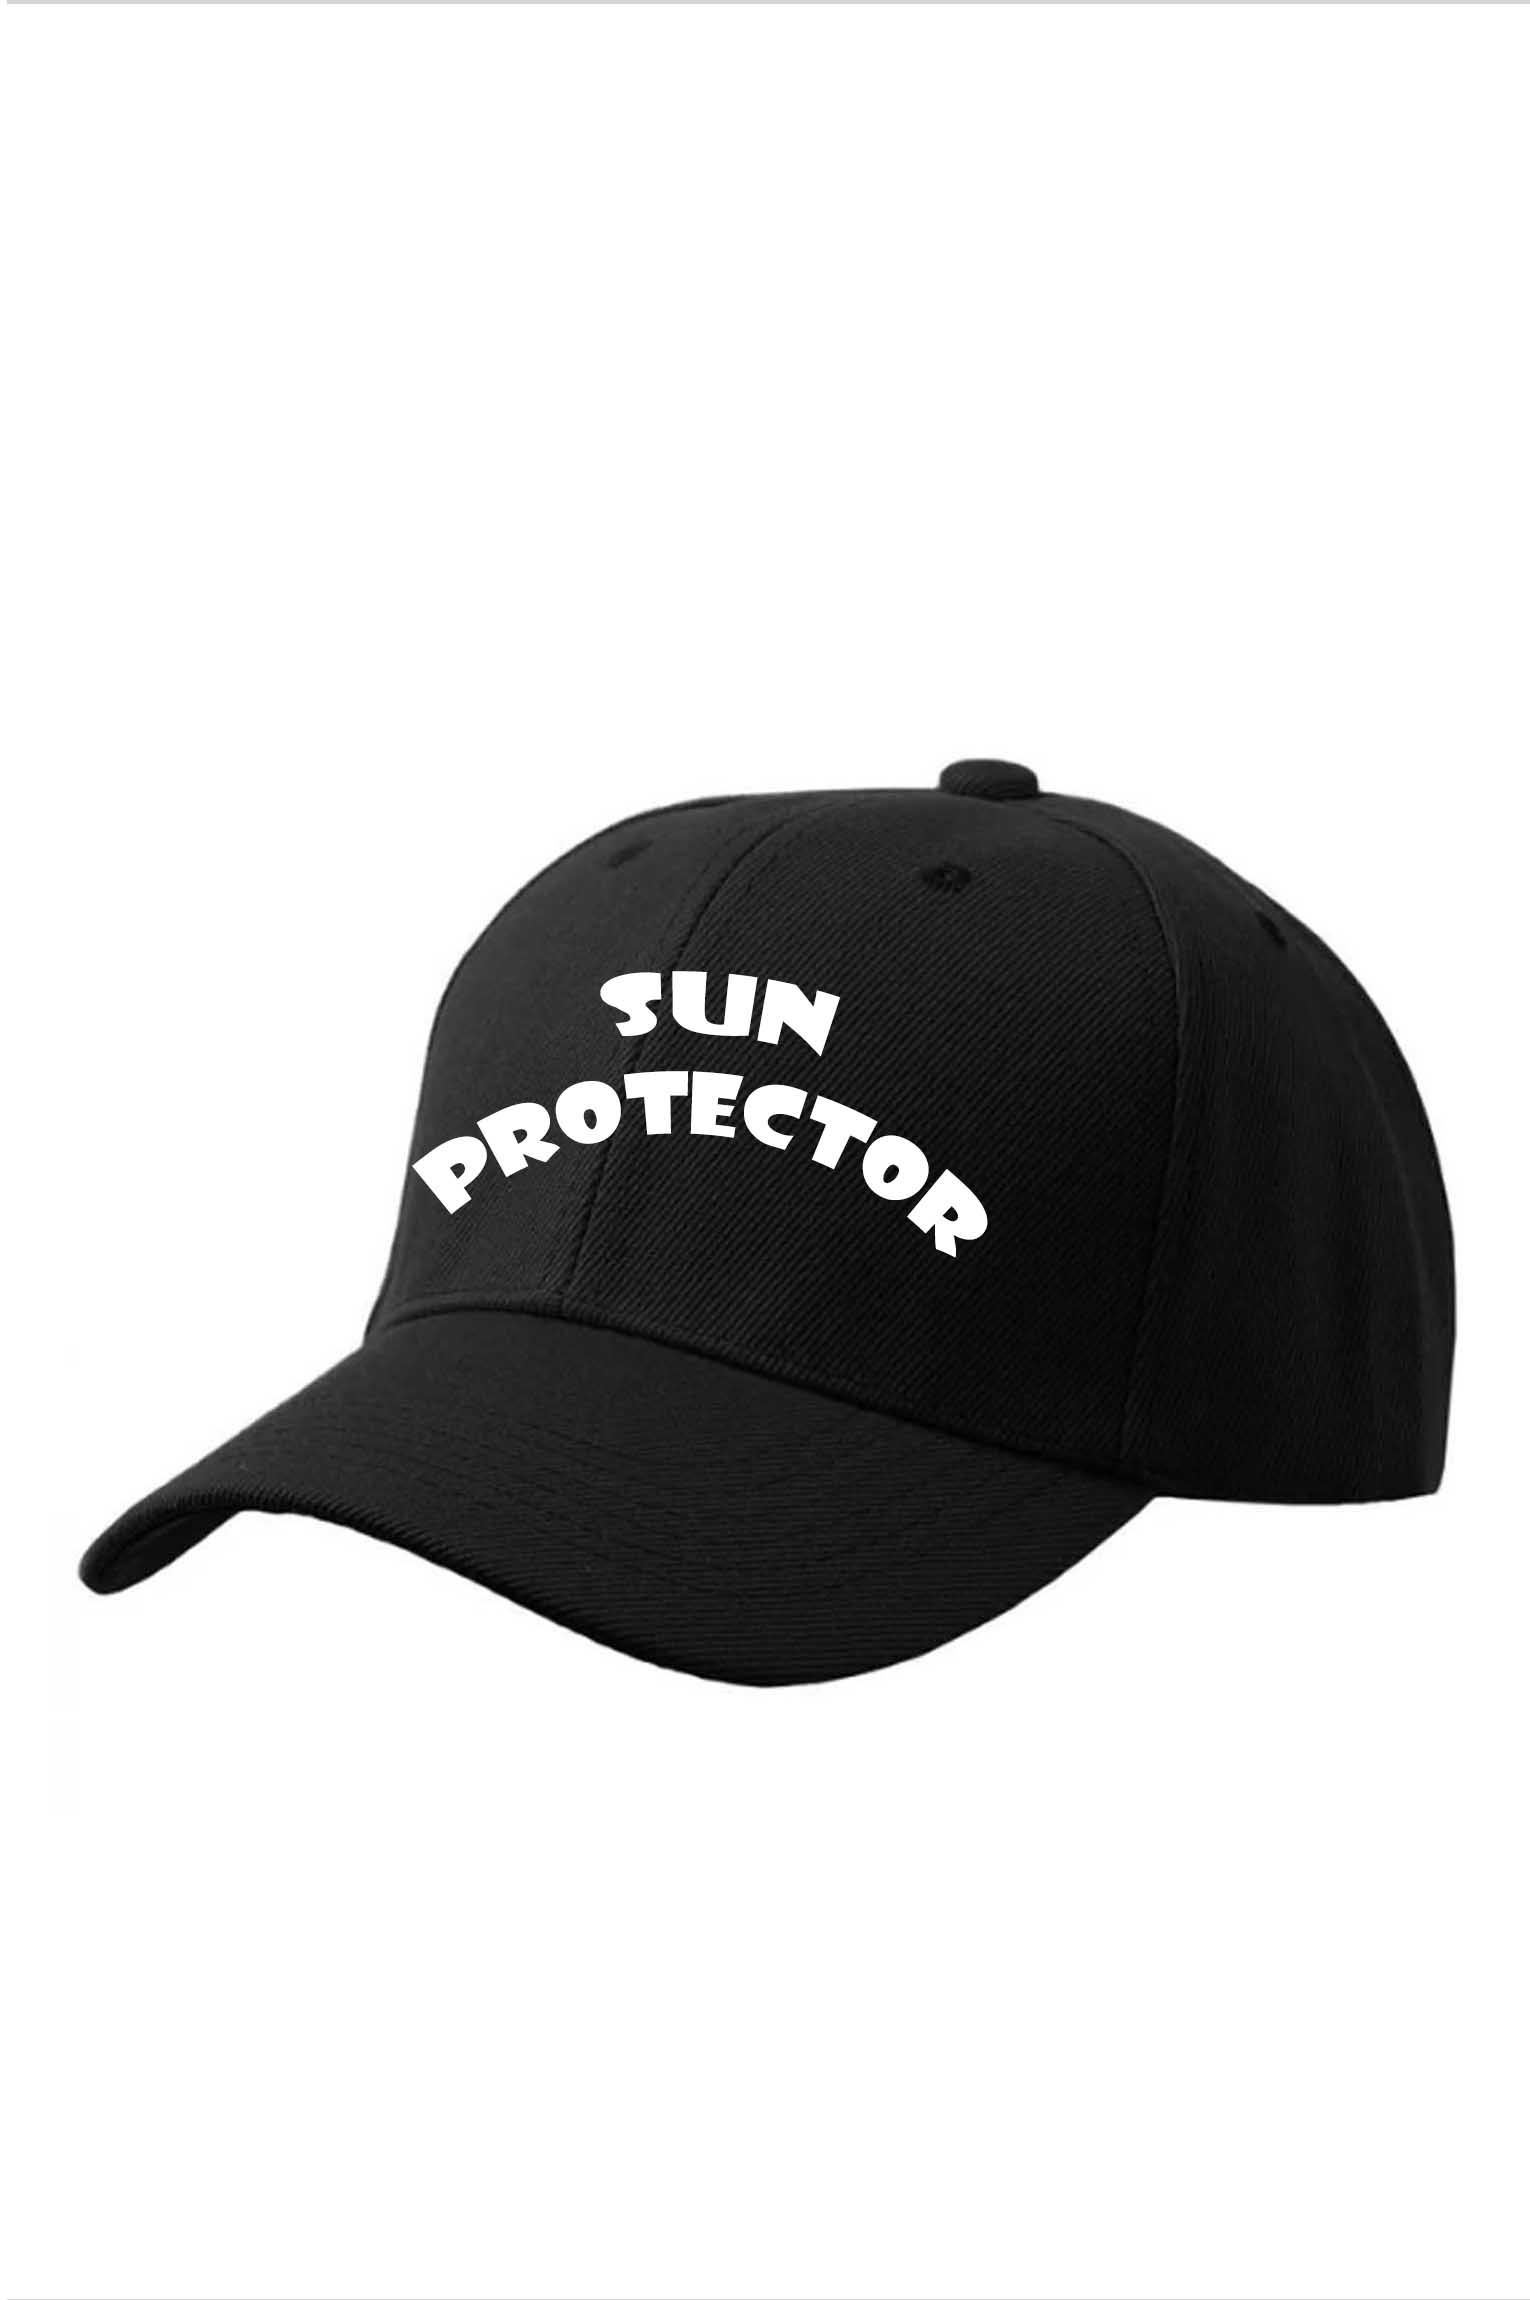 Stylish Sun Protector Printed Hat Premium Quality